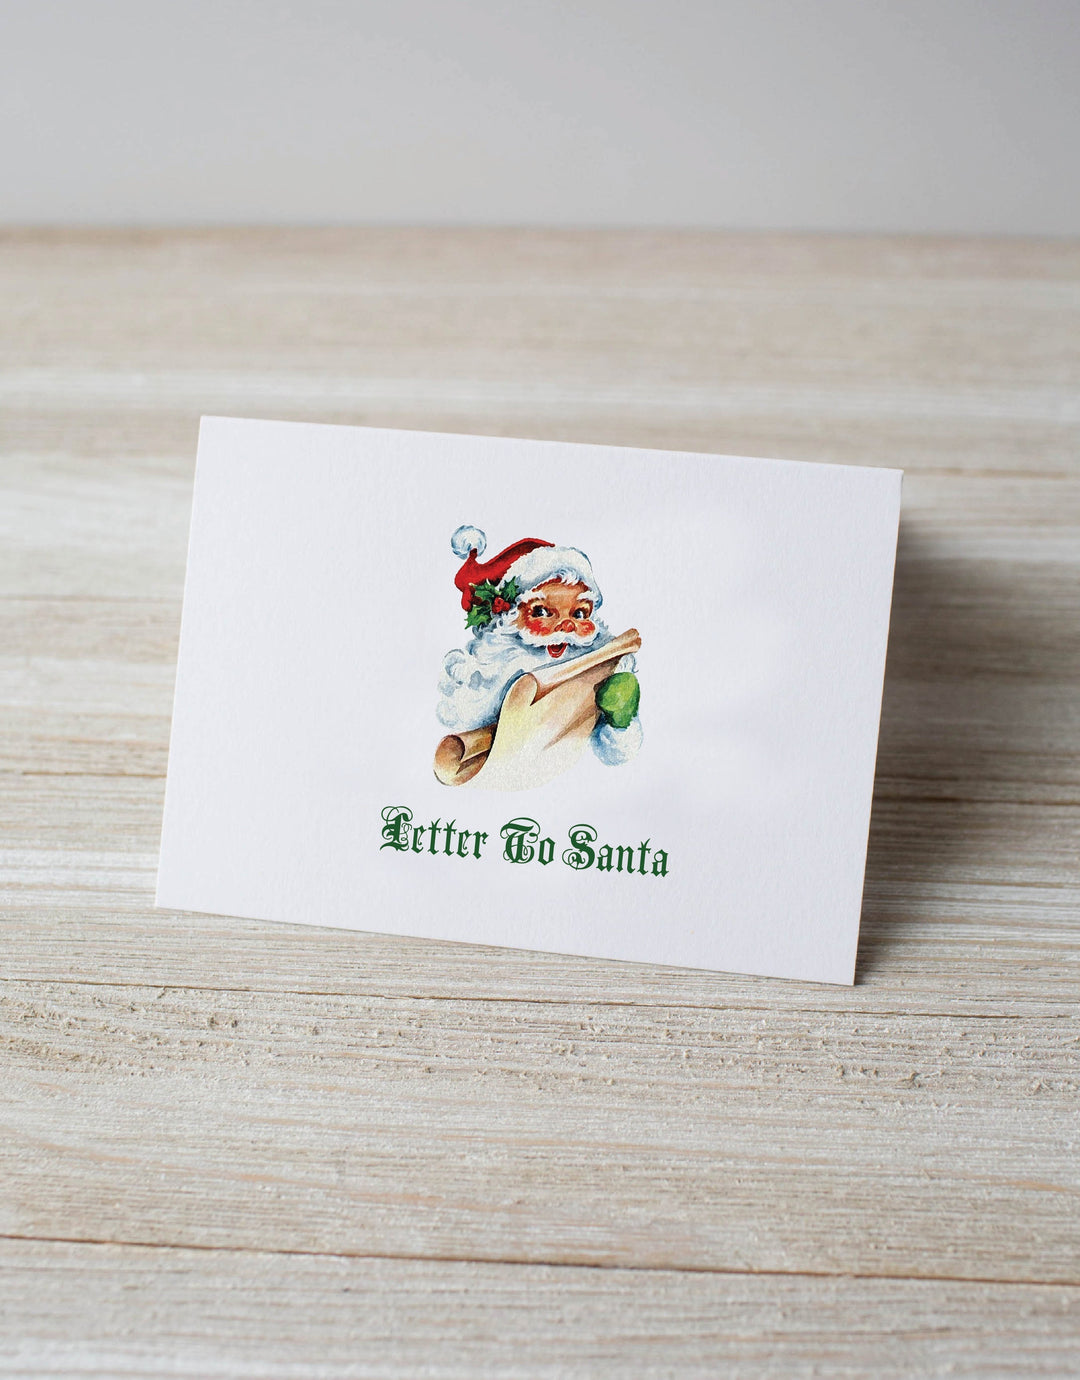 The Elf Letter to Santa